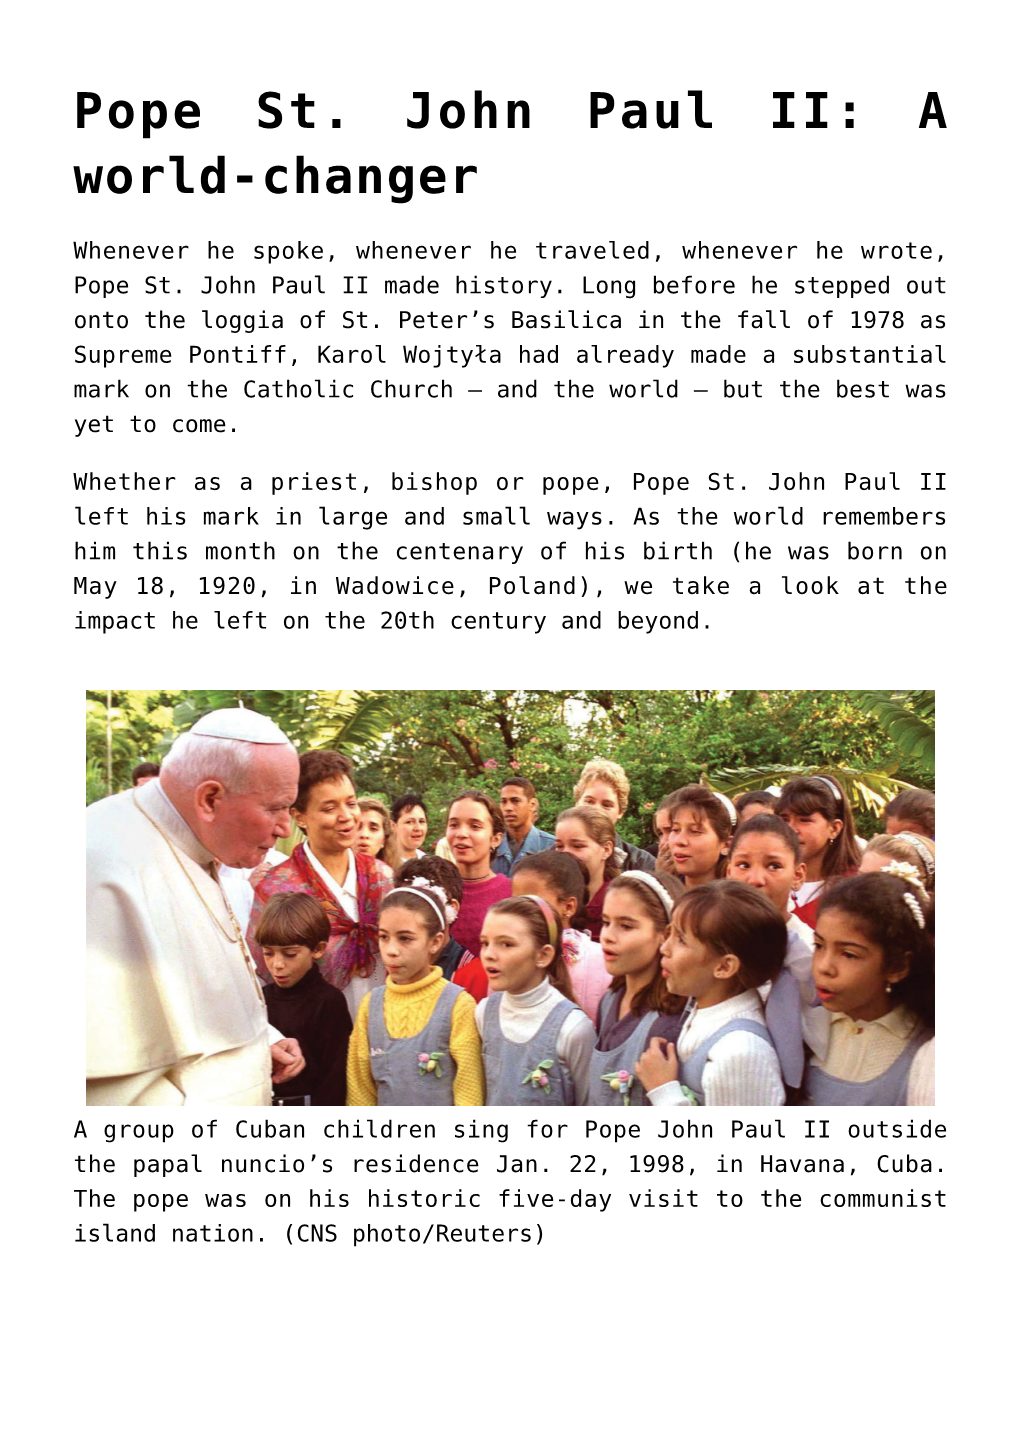 Pope St. John Paul II: a World-Changer